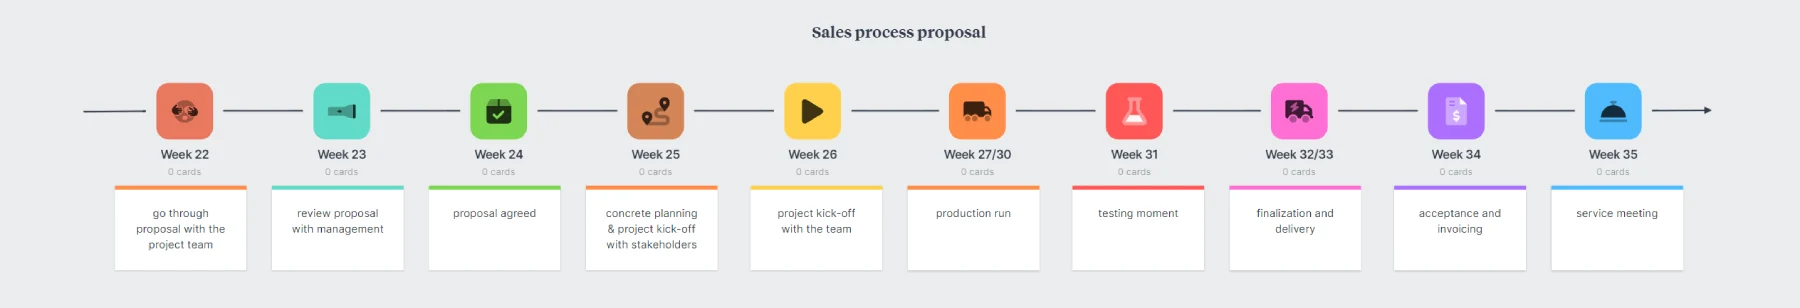 sales proposal process